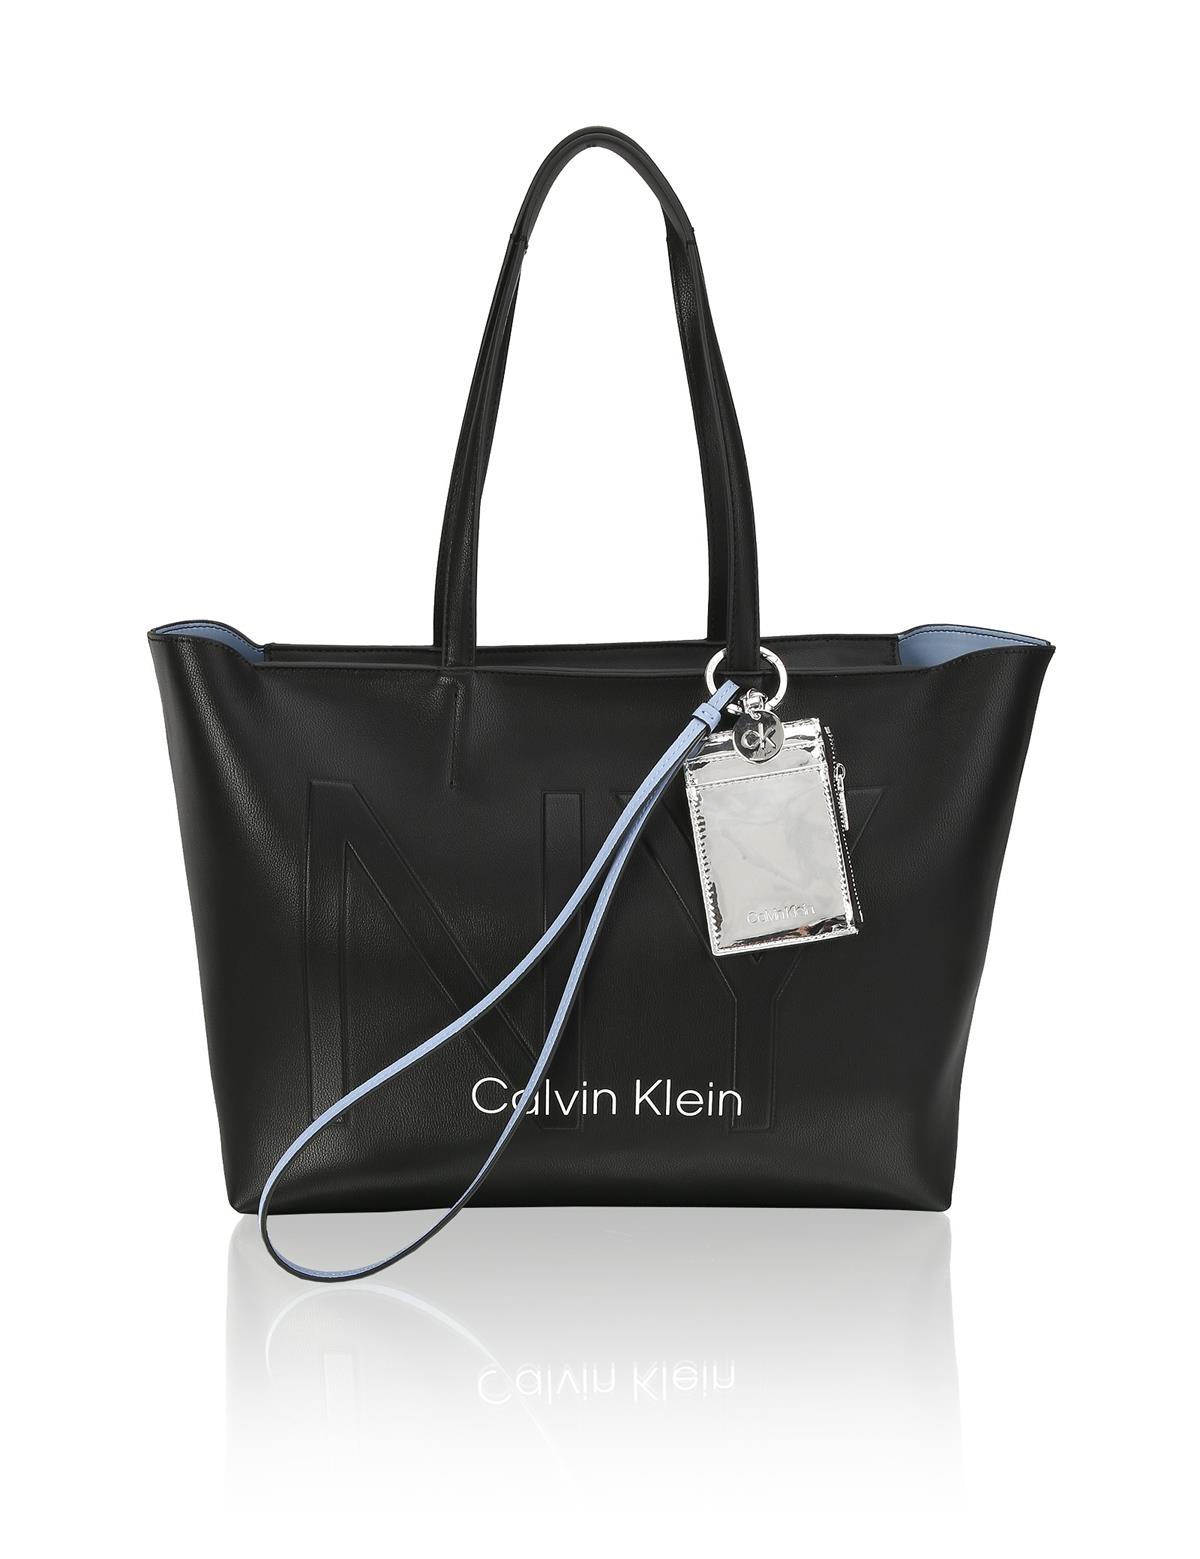 HUMANIC 80 Calvin Klein Shopper EUR 160 6131332690